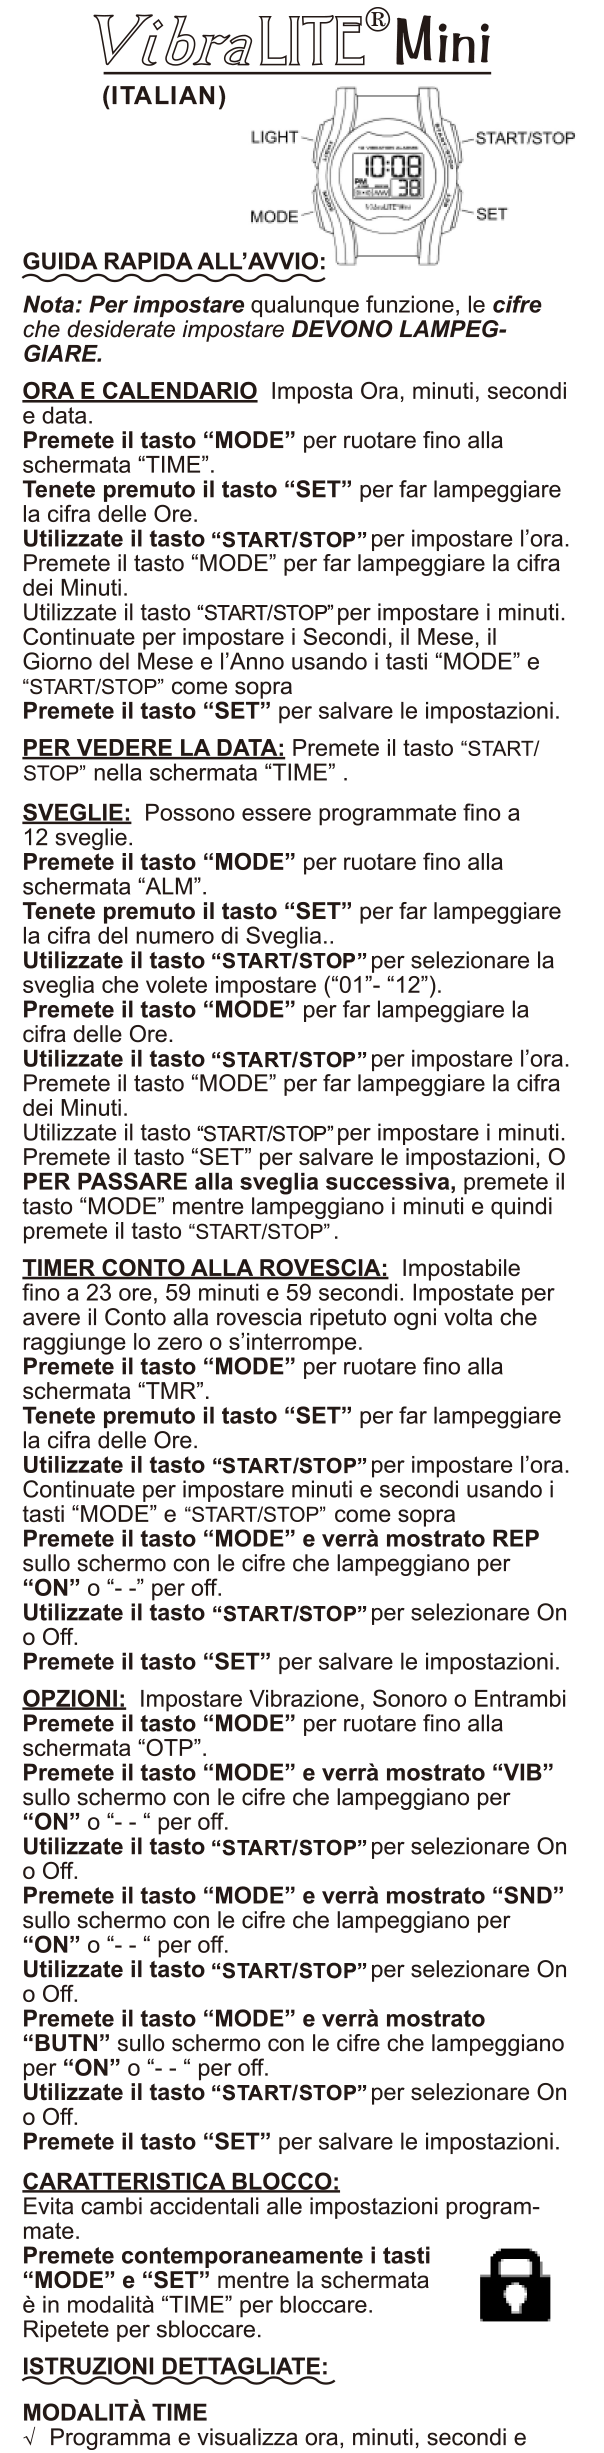 vibralite-mini-italian-instruction-manual-page-1